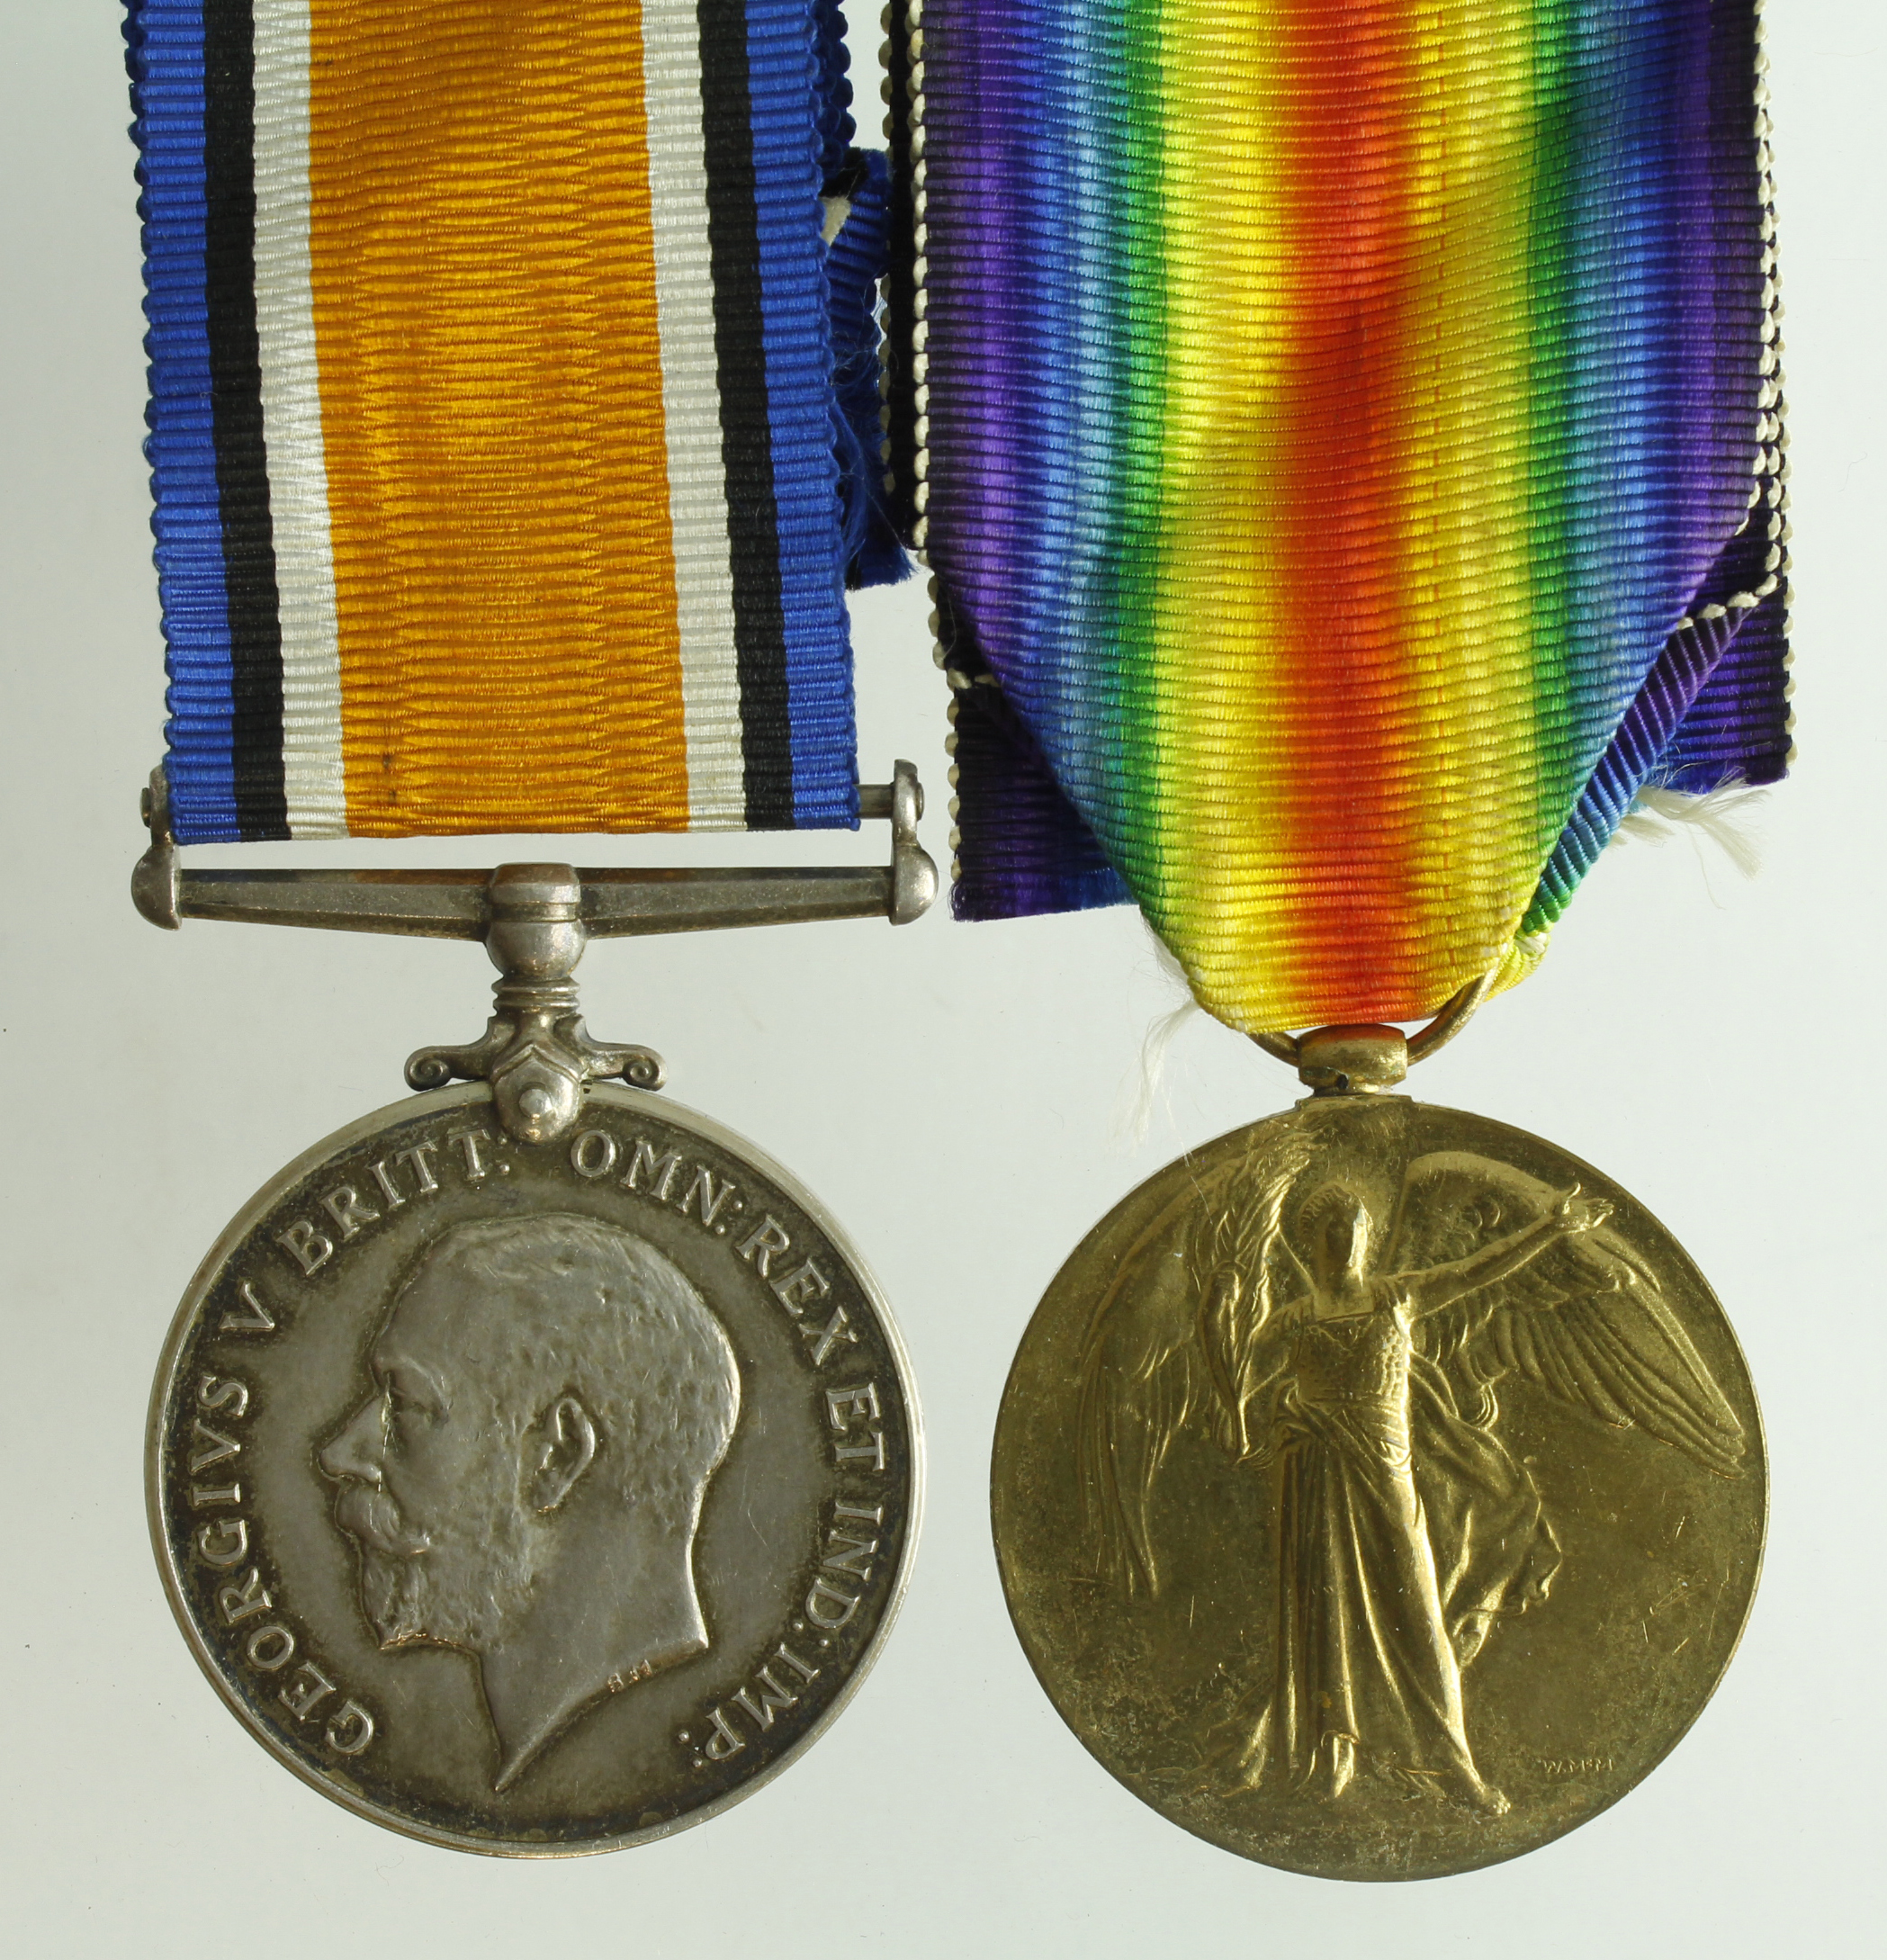 BWM & victory Medal (223 Sjt W A Ramsey Oxf & Bucks L.I.) served 1/4 Bn (missing 1915 Star)